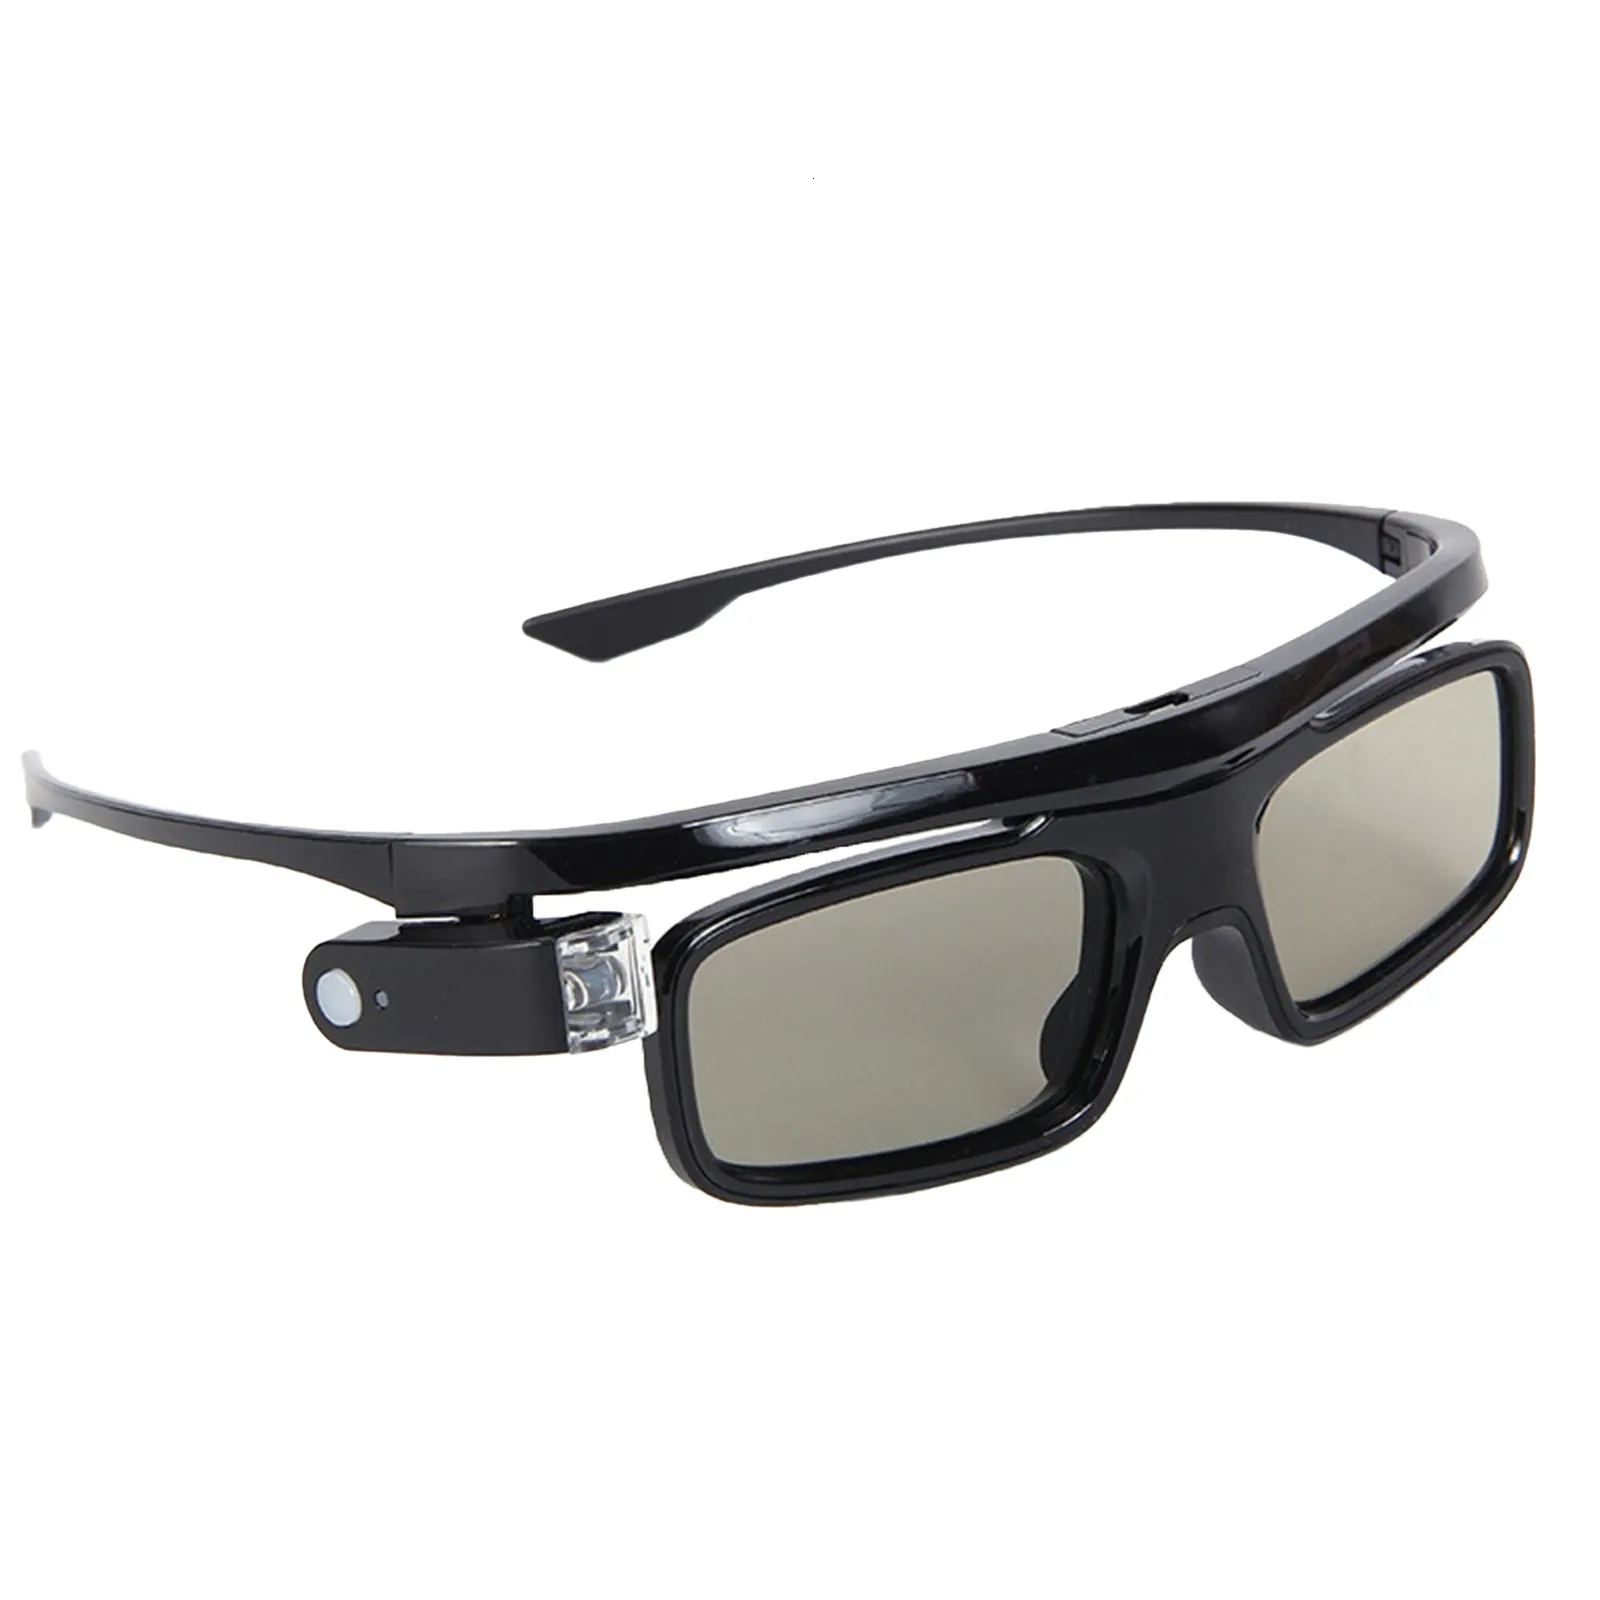 3D Glasses 3D Glasses Clear Picture High Transmittance Universal Active Shutter Movie Glasses for DLP LINK 3D Projectors 230726